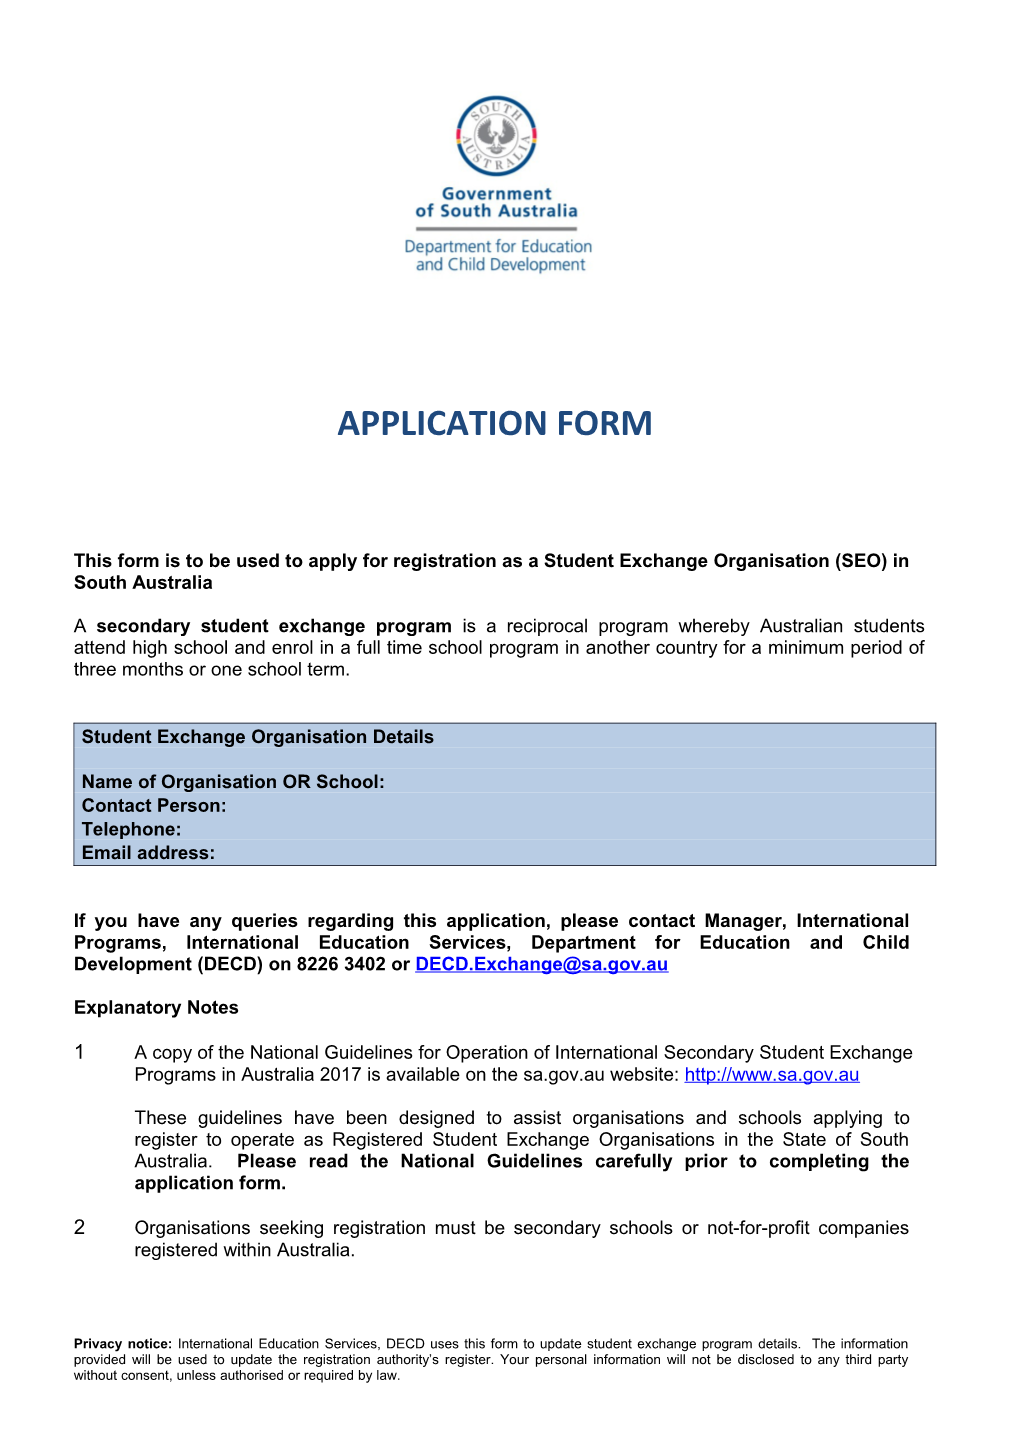 Registration for SEO Application